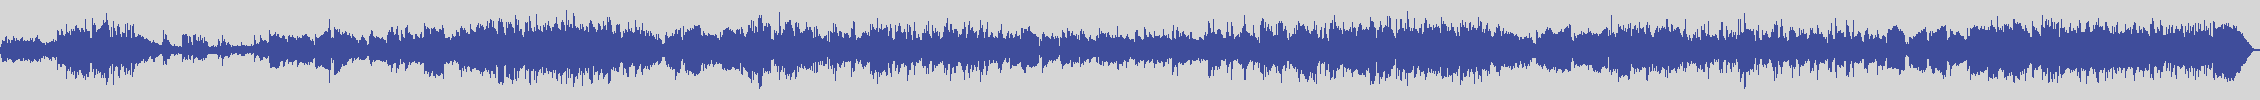 digiphonic_records [DPR013] Little Tony - Laggù Nella Campagna Verde [Original Mix] audio wave form